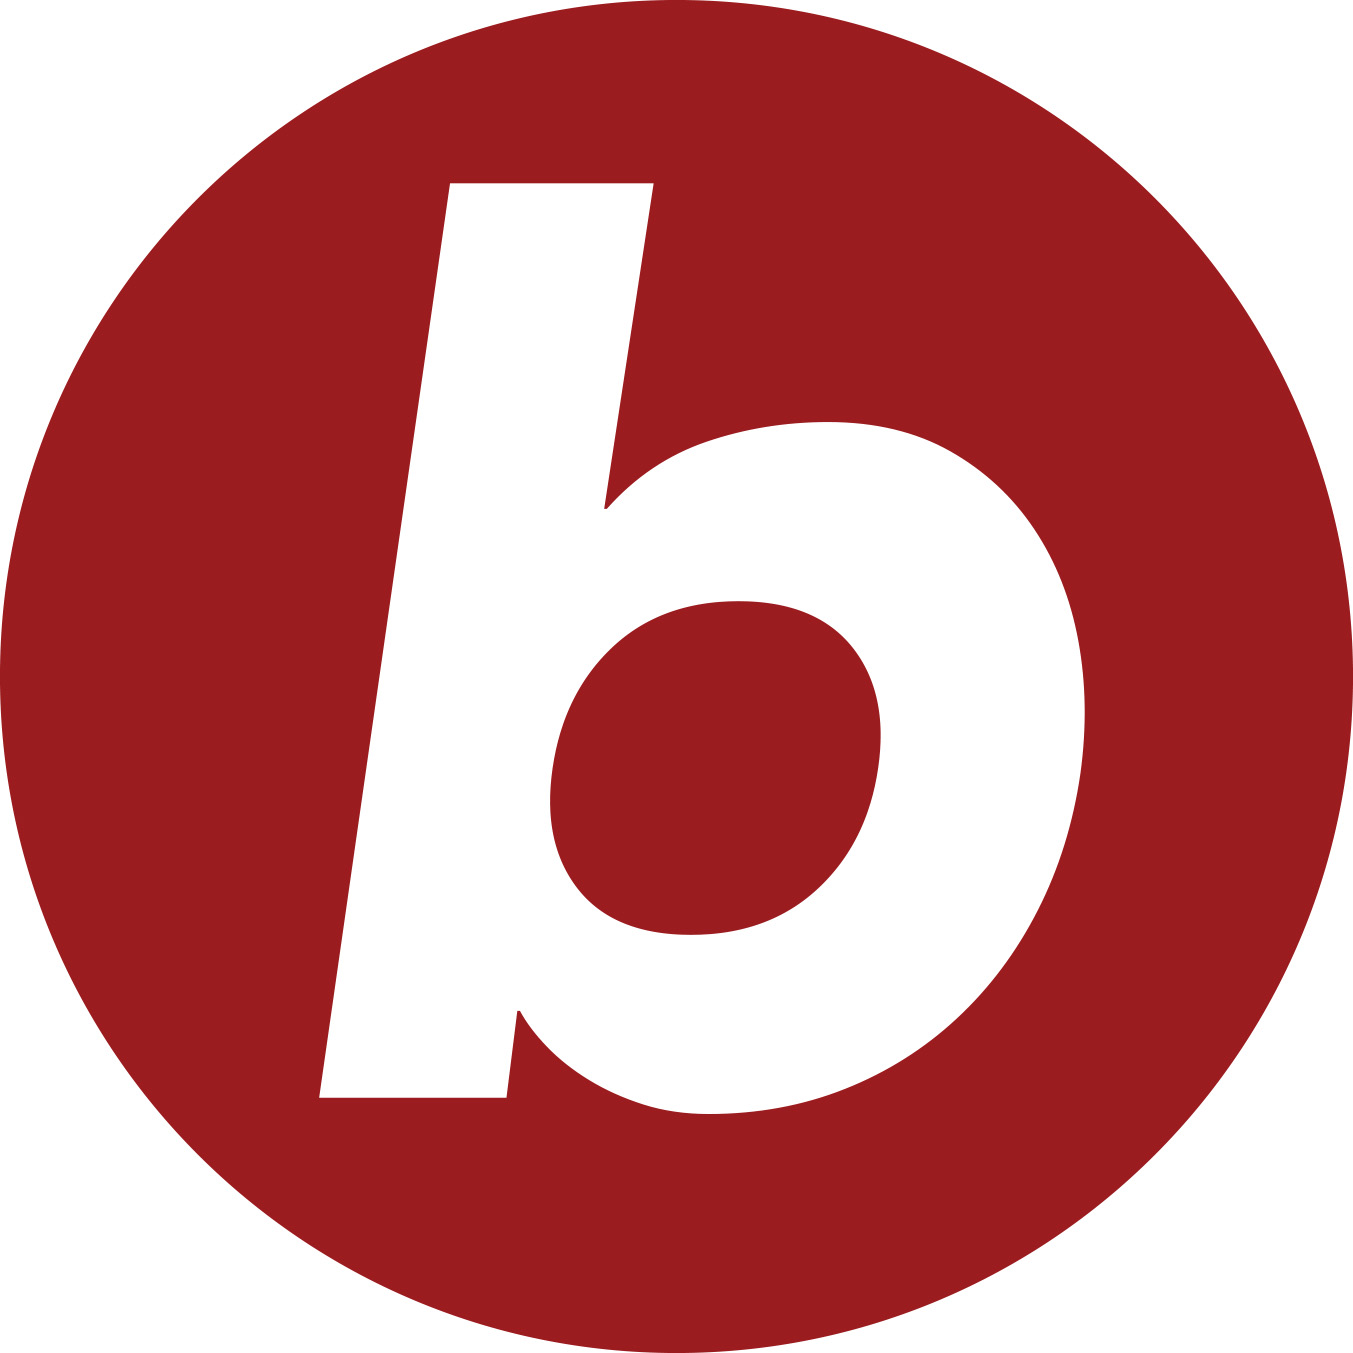 Image result for boston.com logo